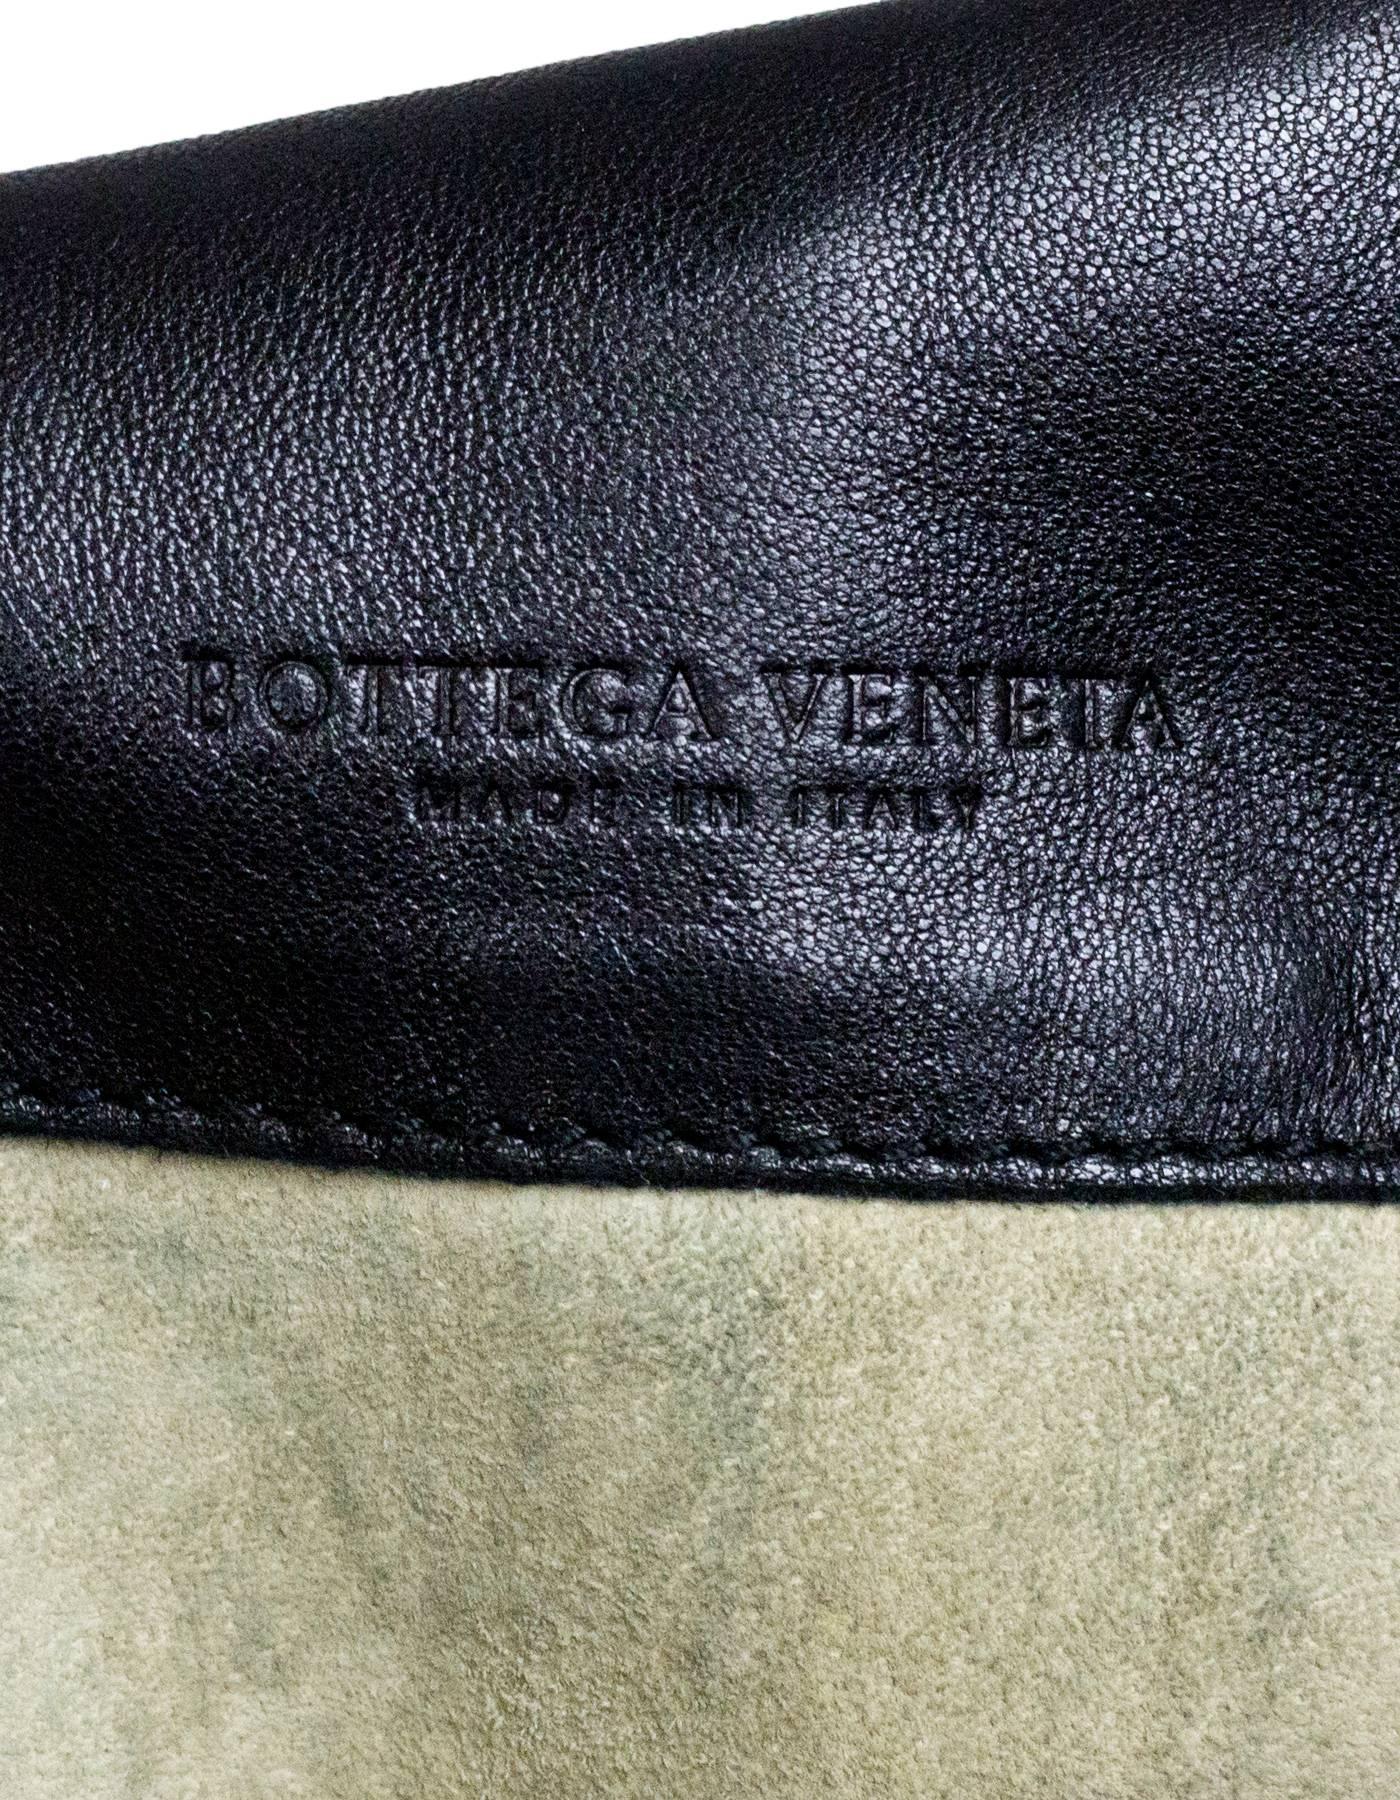 Bottega Veneta Black Leather & Intrecciato Woven Tote Bag 2